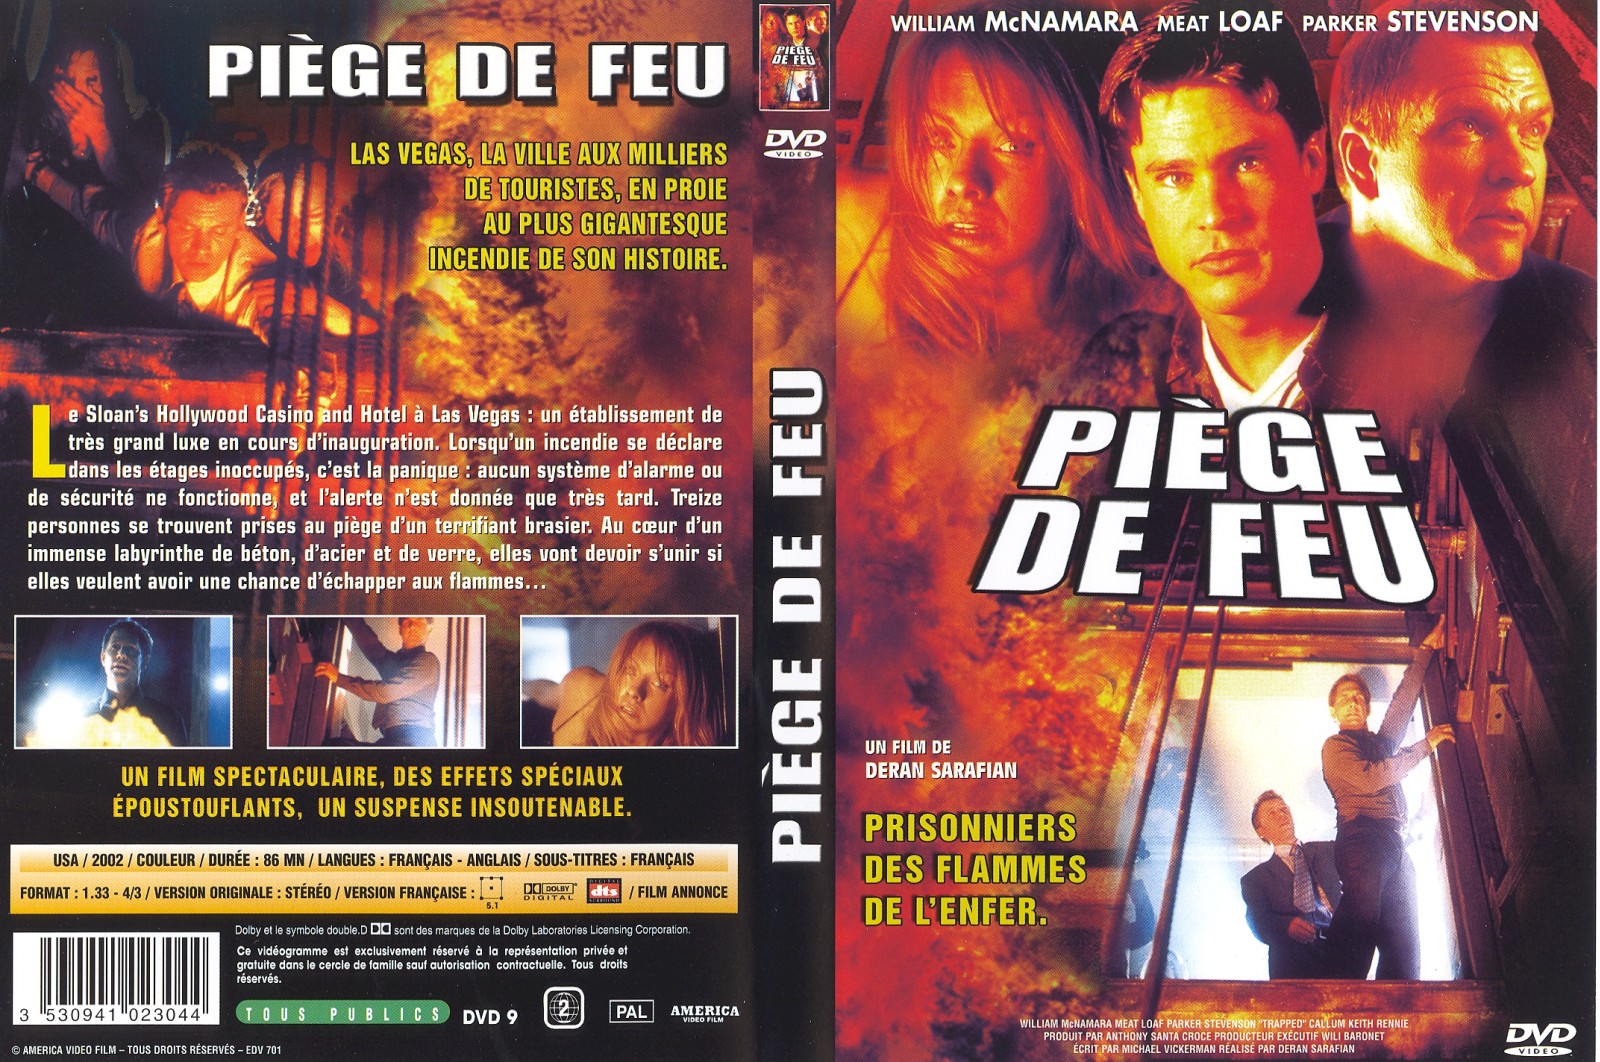 Jaquette DVD Pige de feu (2002)